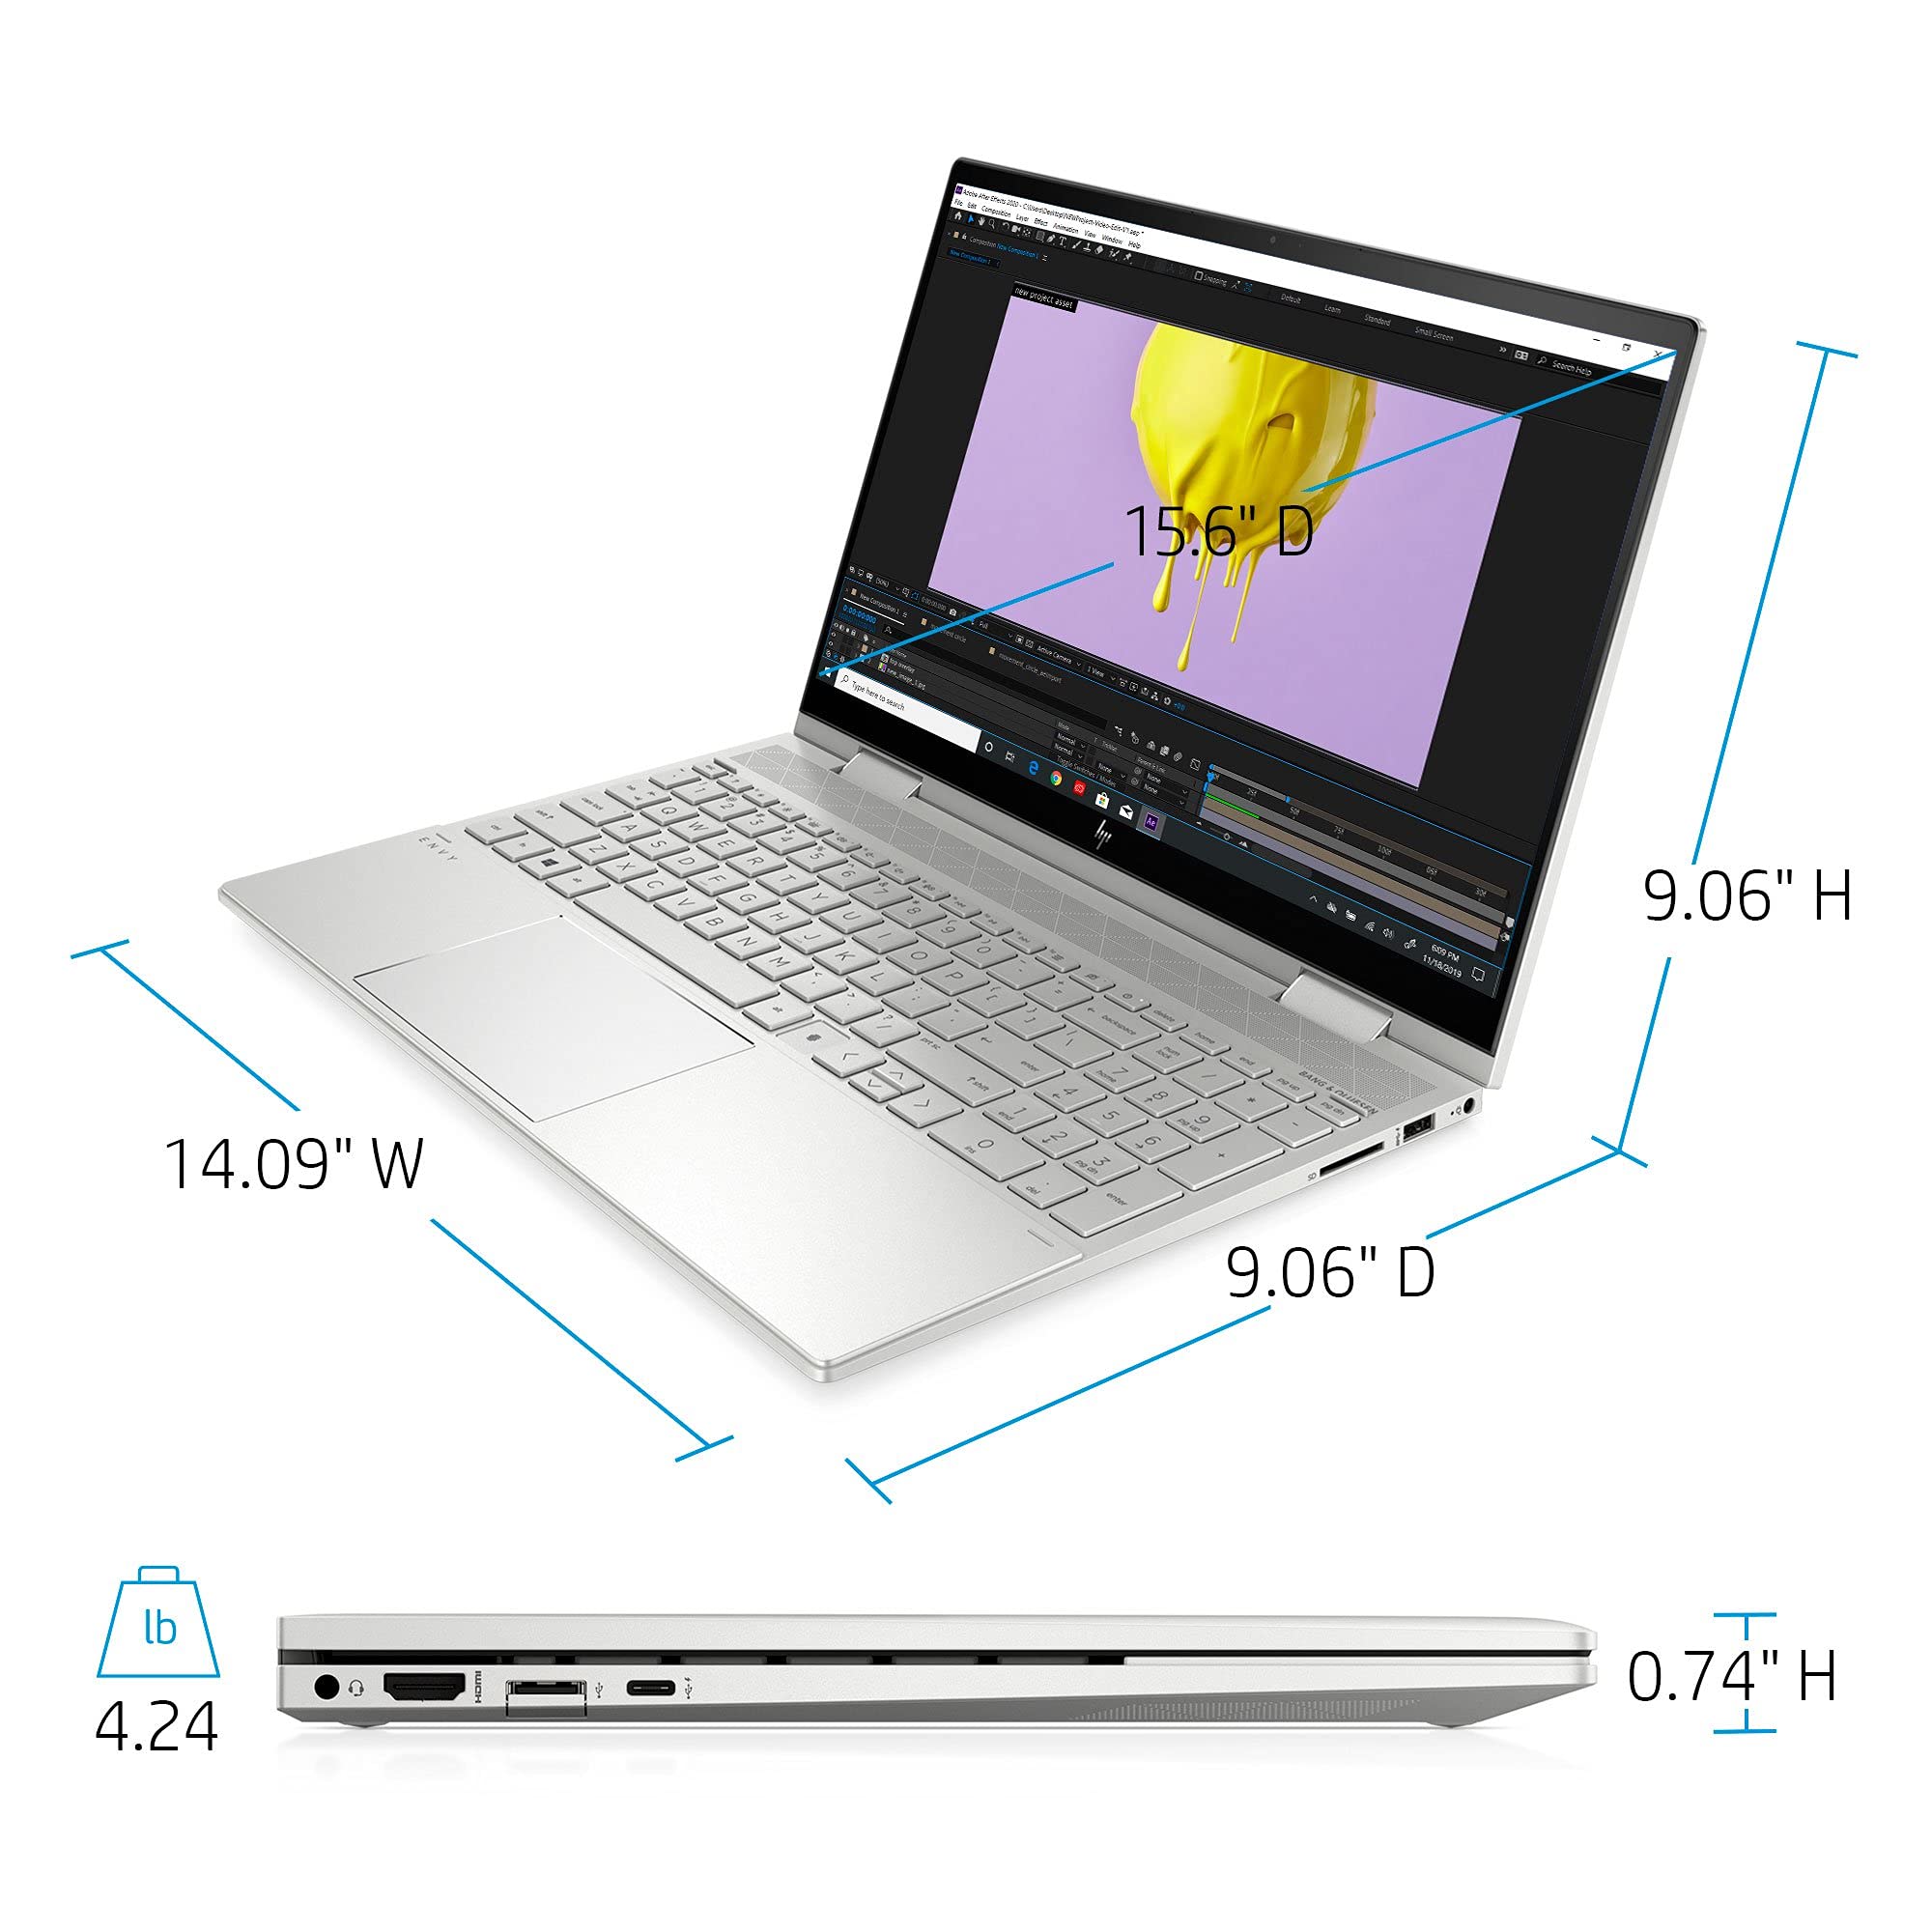 HP Newest Envy x360 Convert 15.6" FHD IPS Touchscreen Premium 2-in-1 Laptop, 11th Gen Intel Quad-Core i5-1135G7, 64GB RAM, 1TB PCIe SSD, Backlit Keyboard, Fingerprint, Windows 10 Home + HDMI Cable